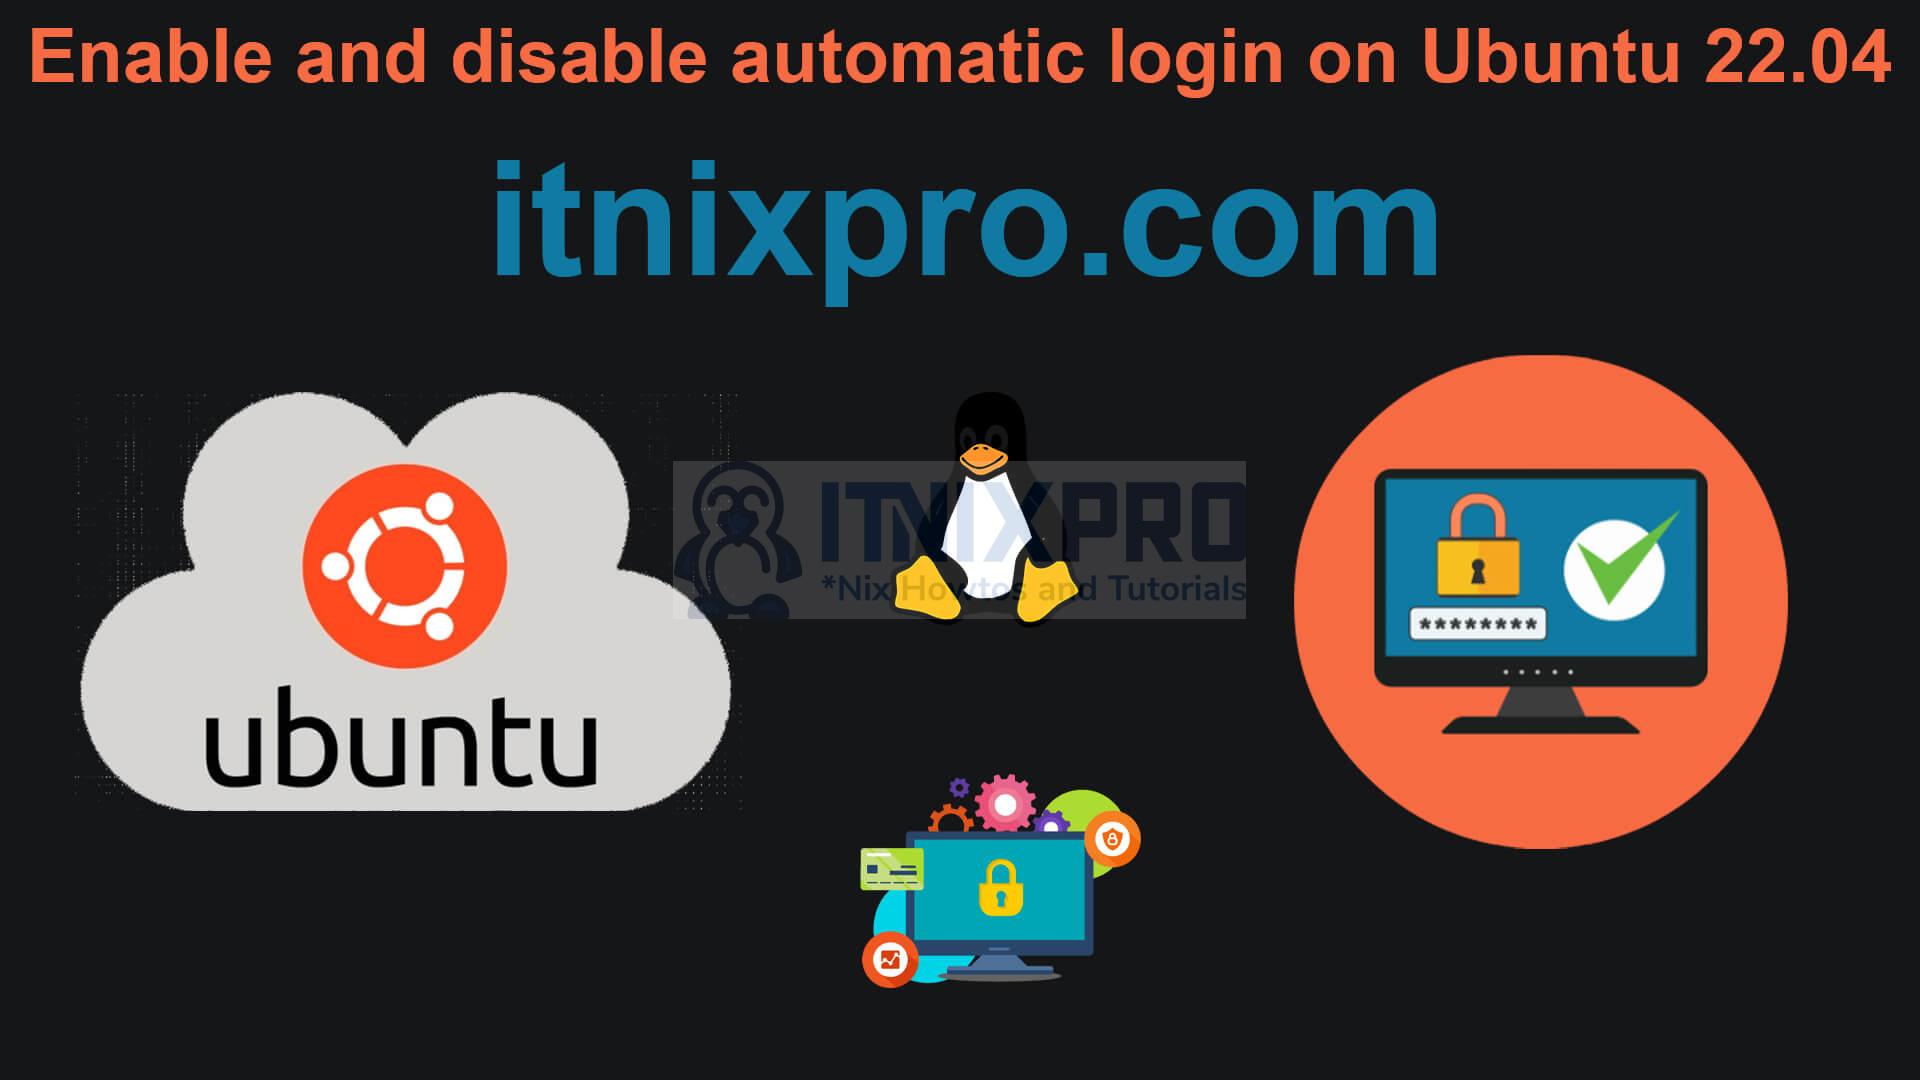 Enable and disable automatic login on Ubuntu 22.04